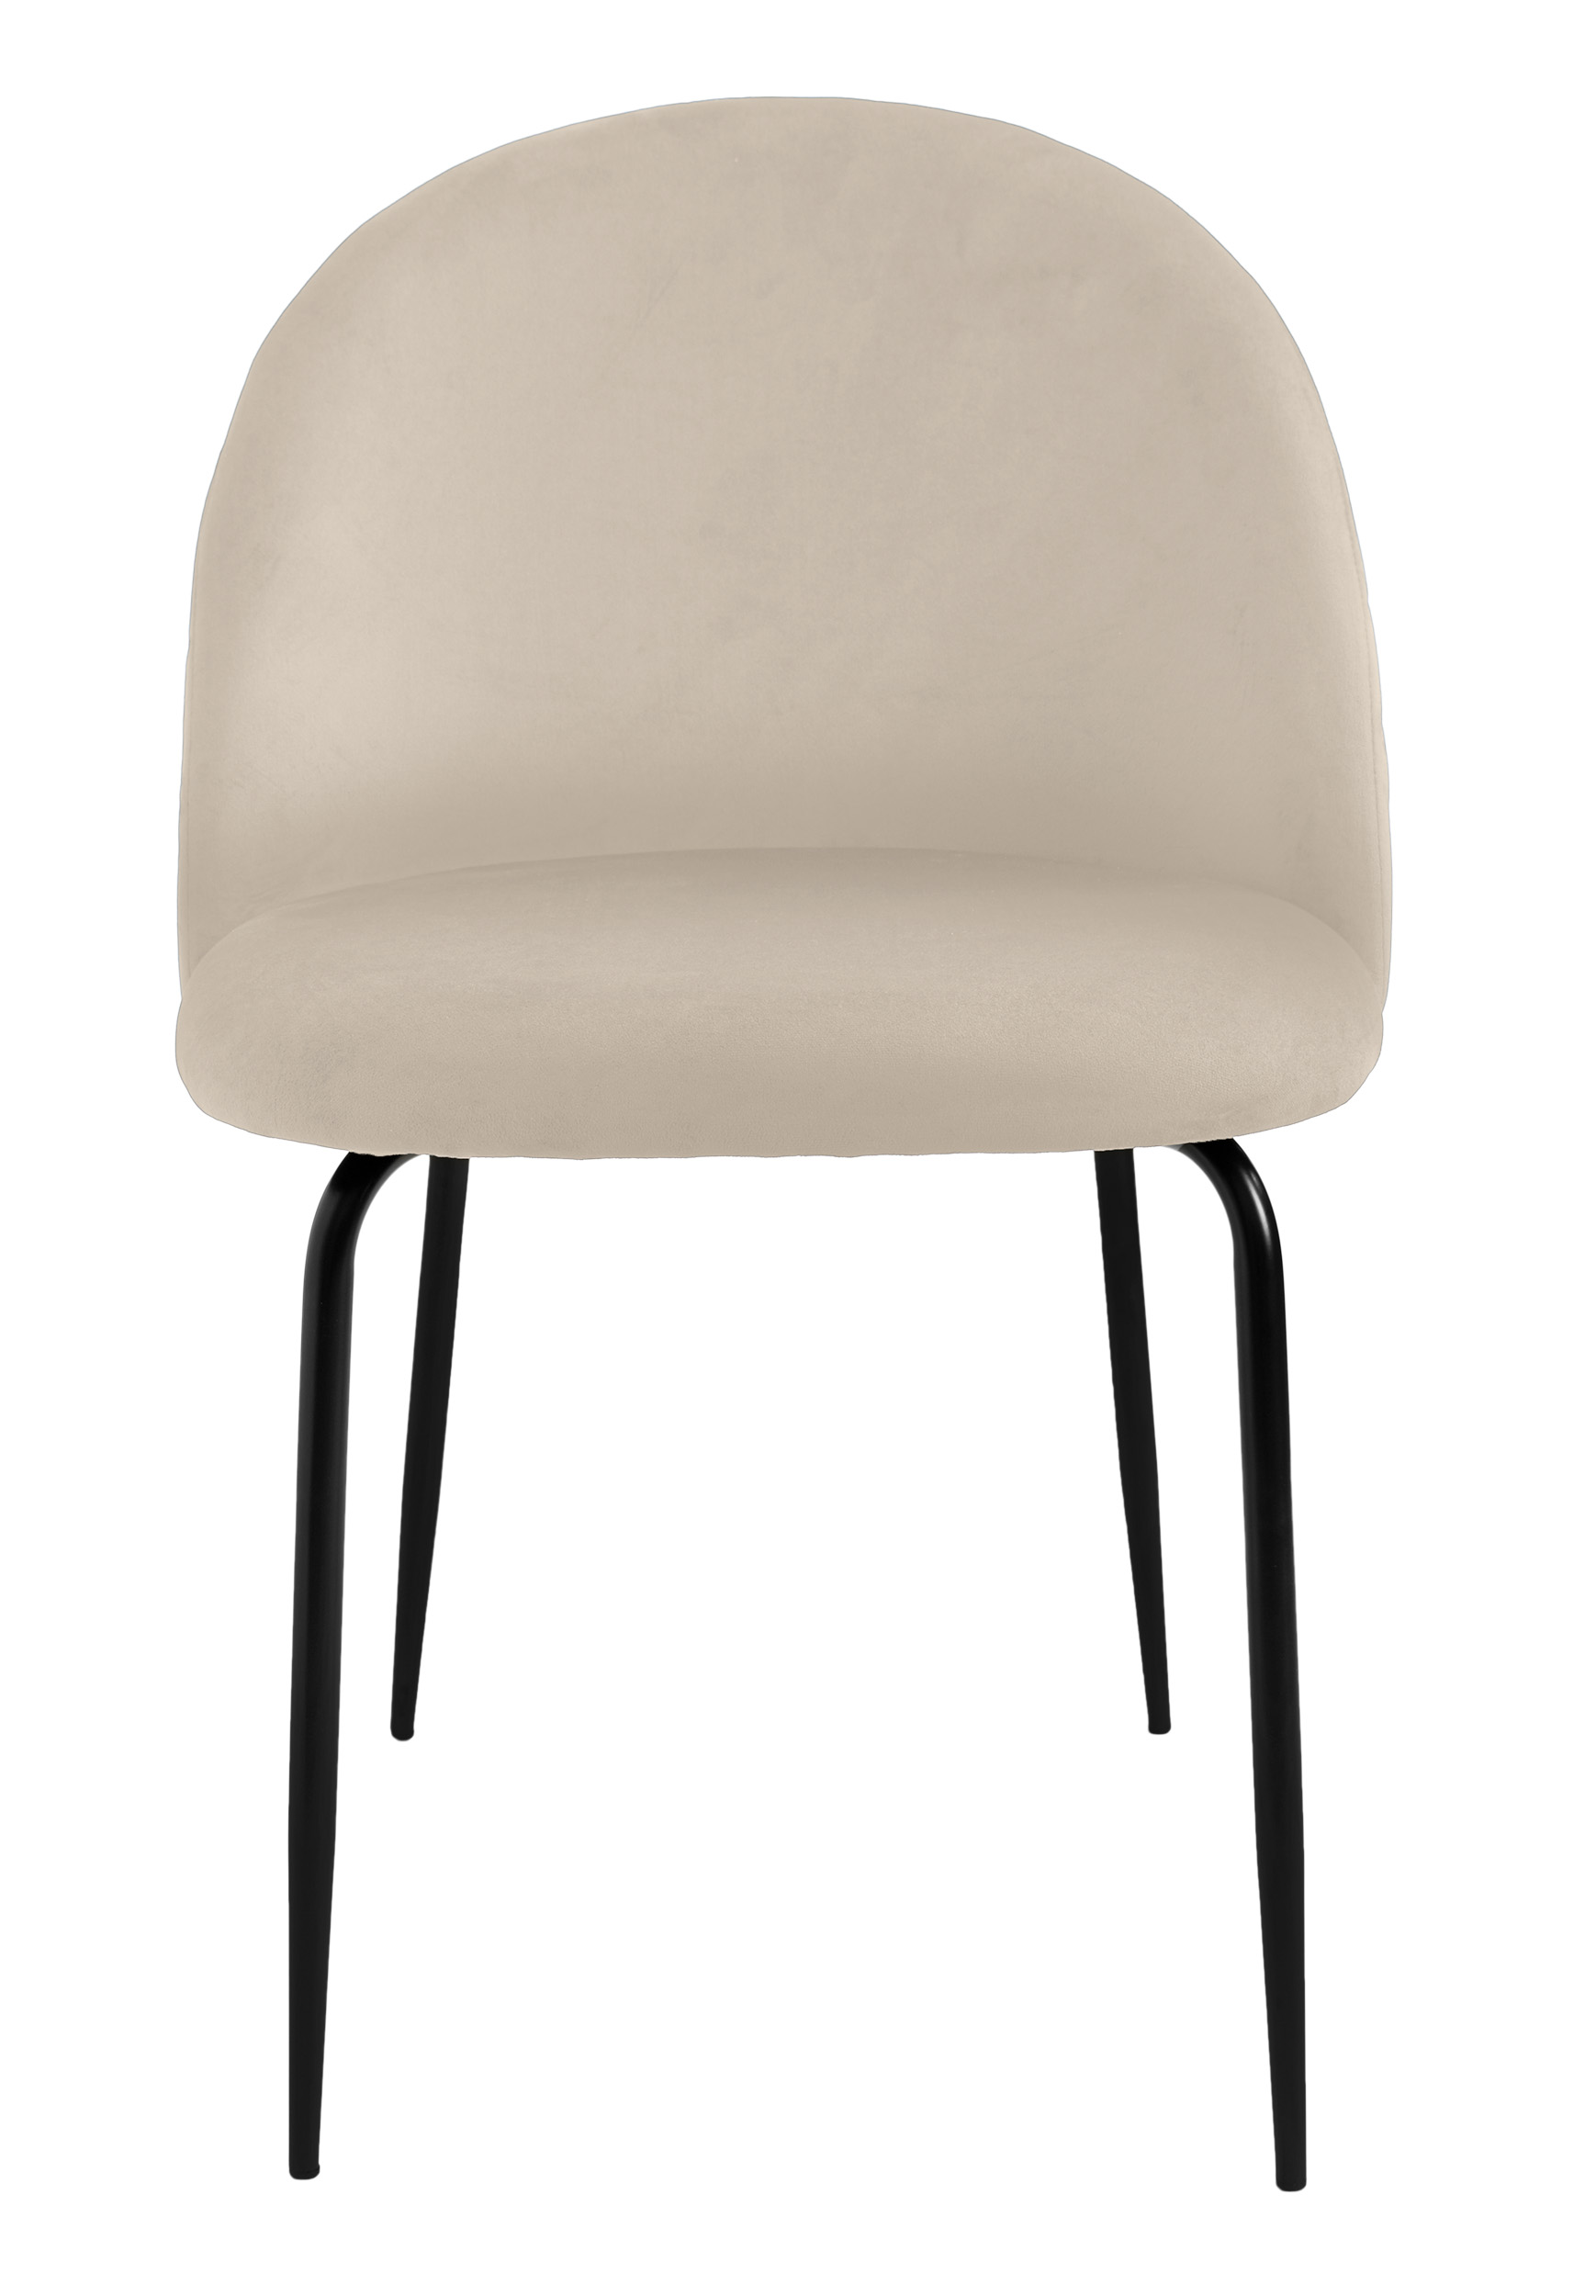 Krzesło aksamitne FARGO Velvet Beżowe